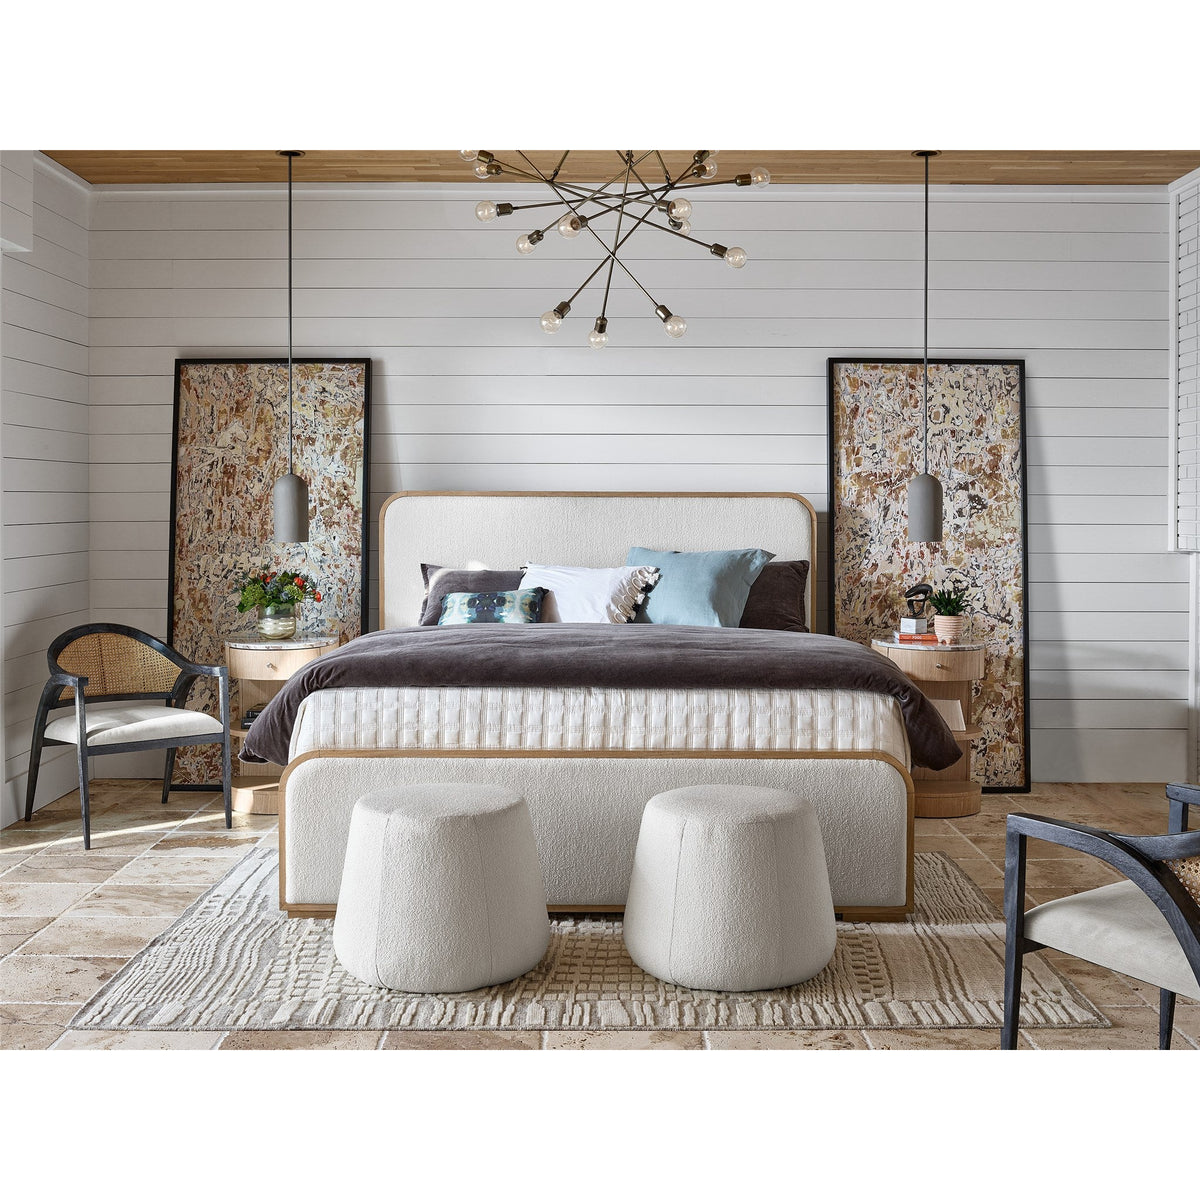 Nomad Bed - Be Bold Furniture